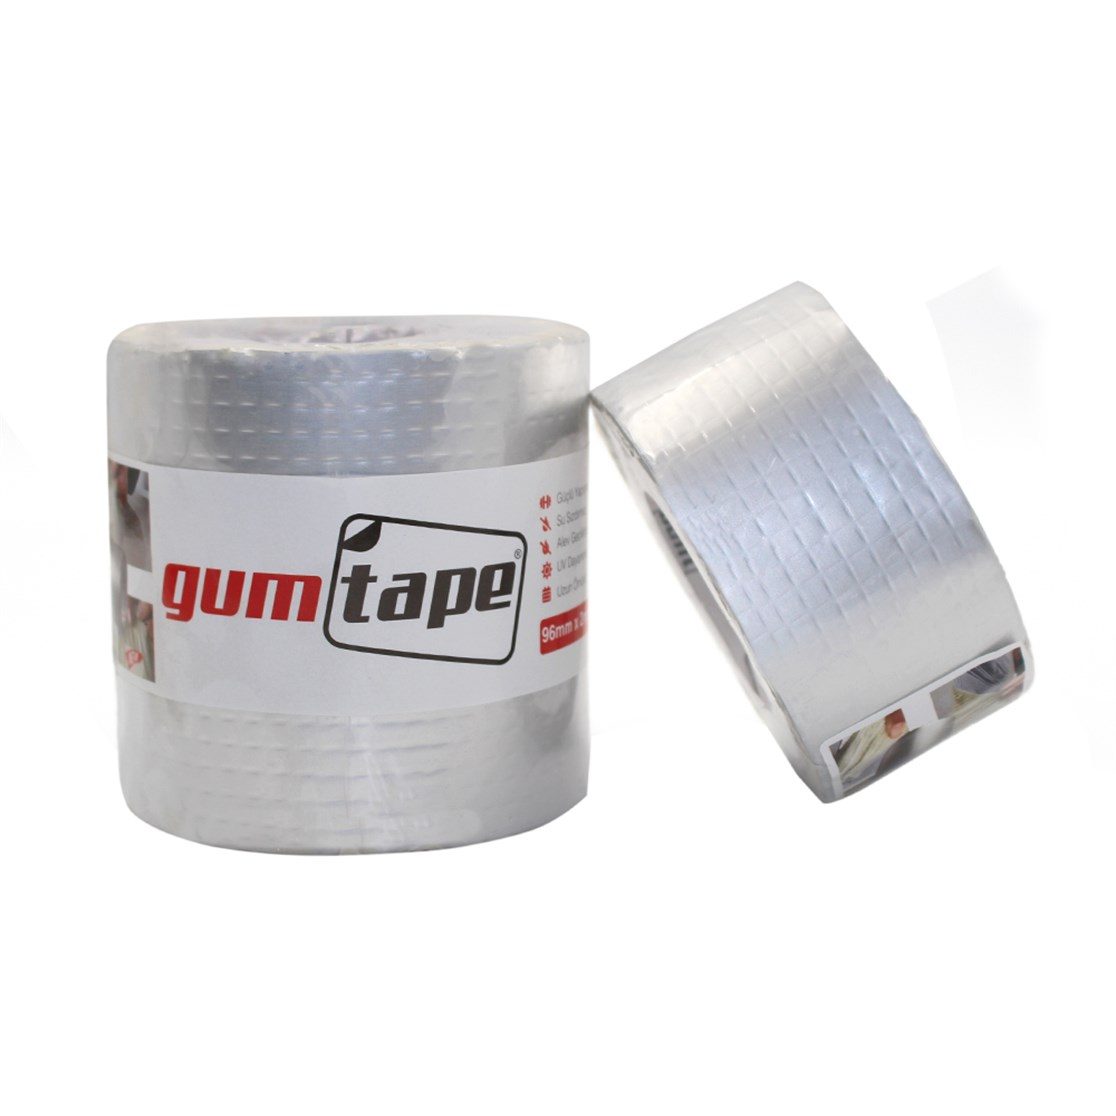 CLZ192 Gum tape Sakız Bant 48 mm x 2 metre Alüminyum Tamir Bandı (4172)